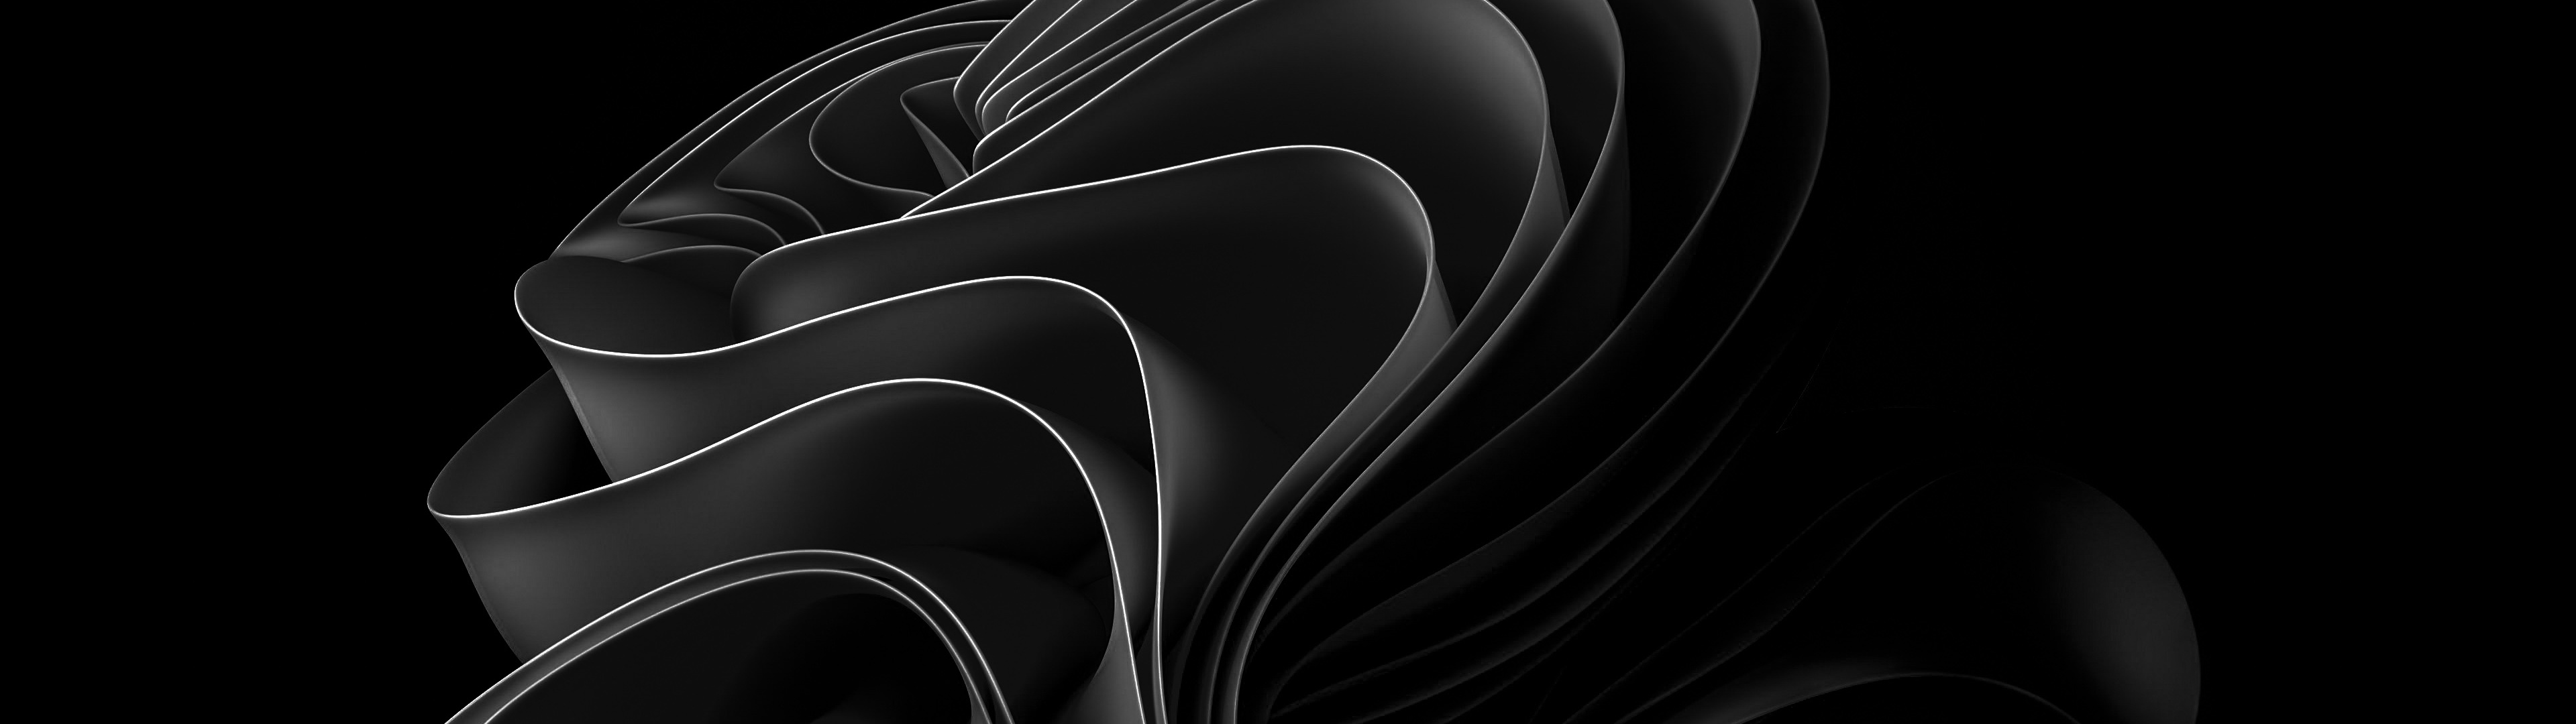 Windows 11 Wallpaper 4K, Black abstract, Stock